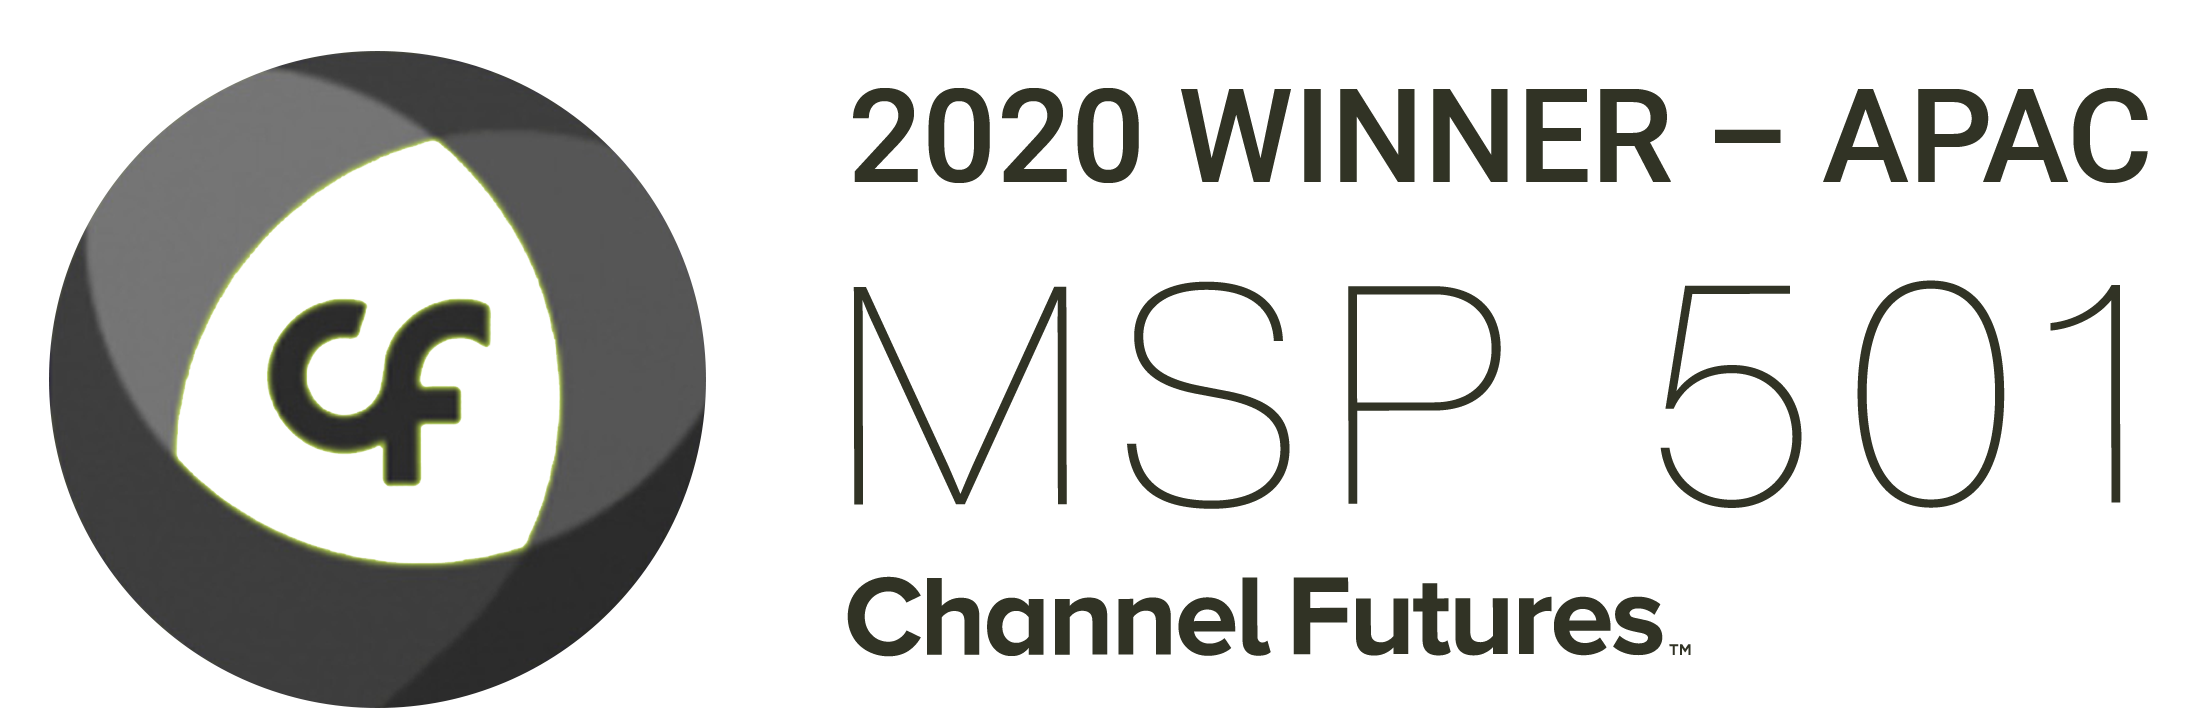 Apac 2020 Msp 501 Winner 3 1 | Managed It Services